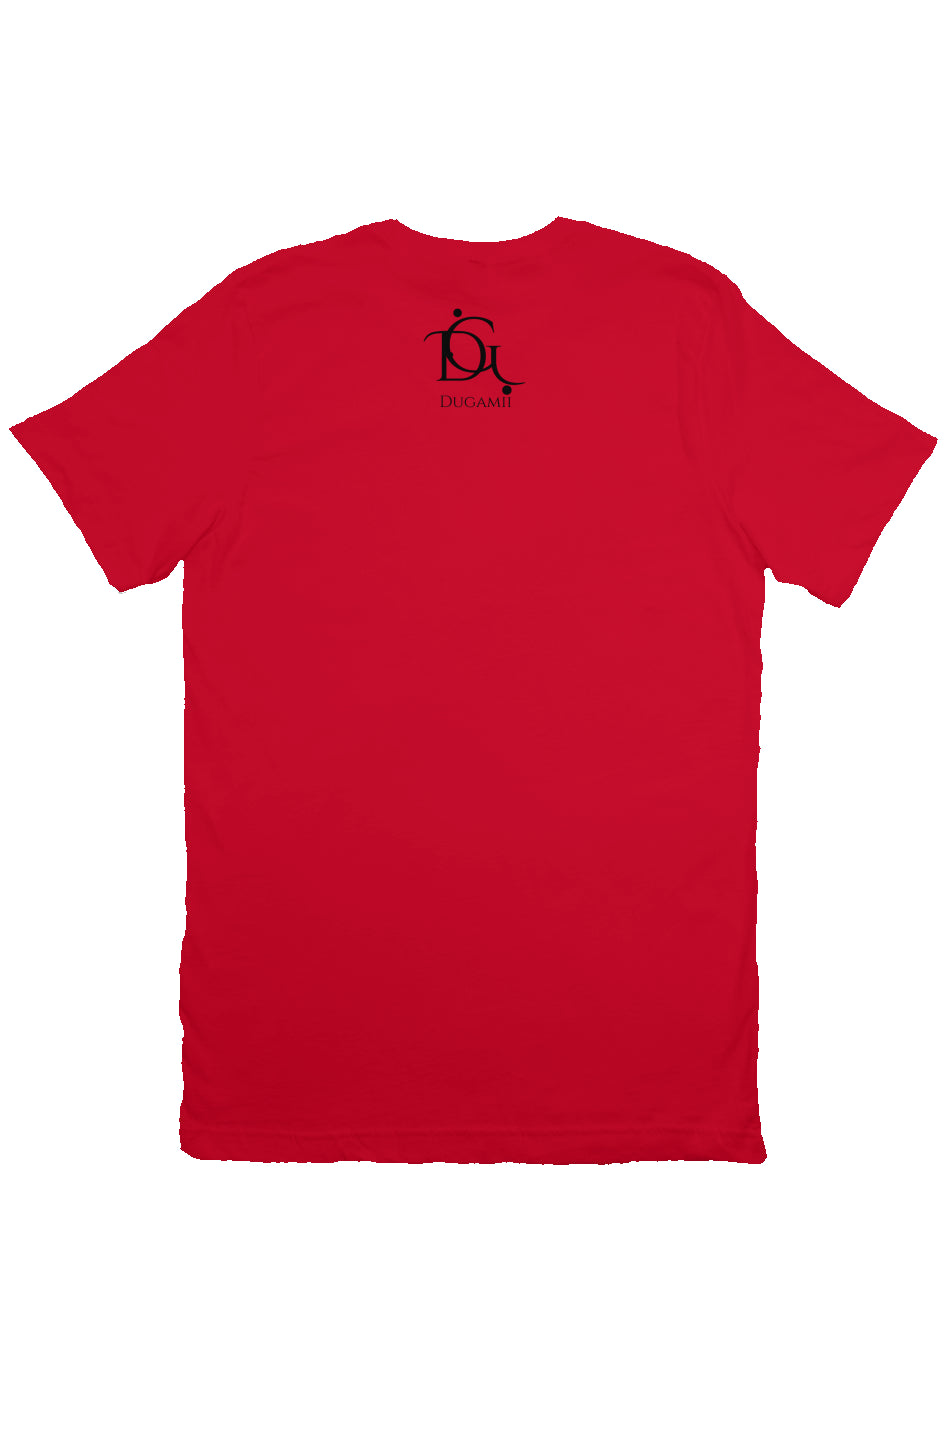 DuGamii "Basquiat Inspired Artwork" Premium Red T-Shirt